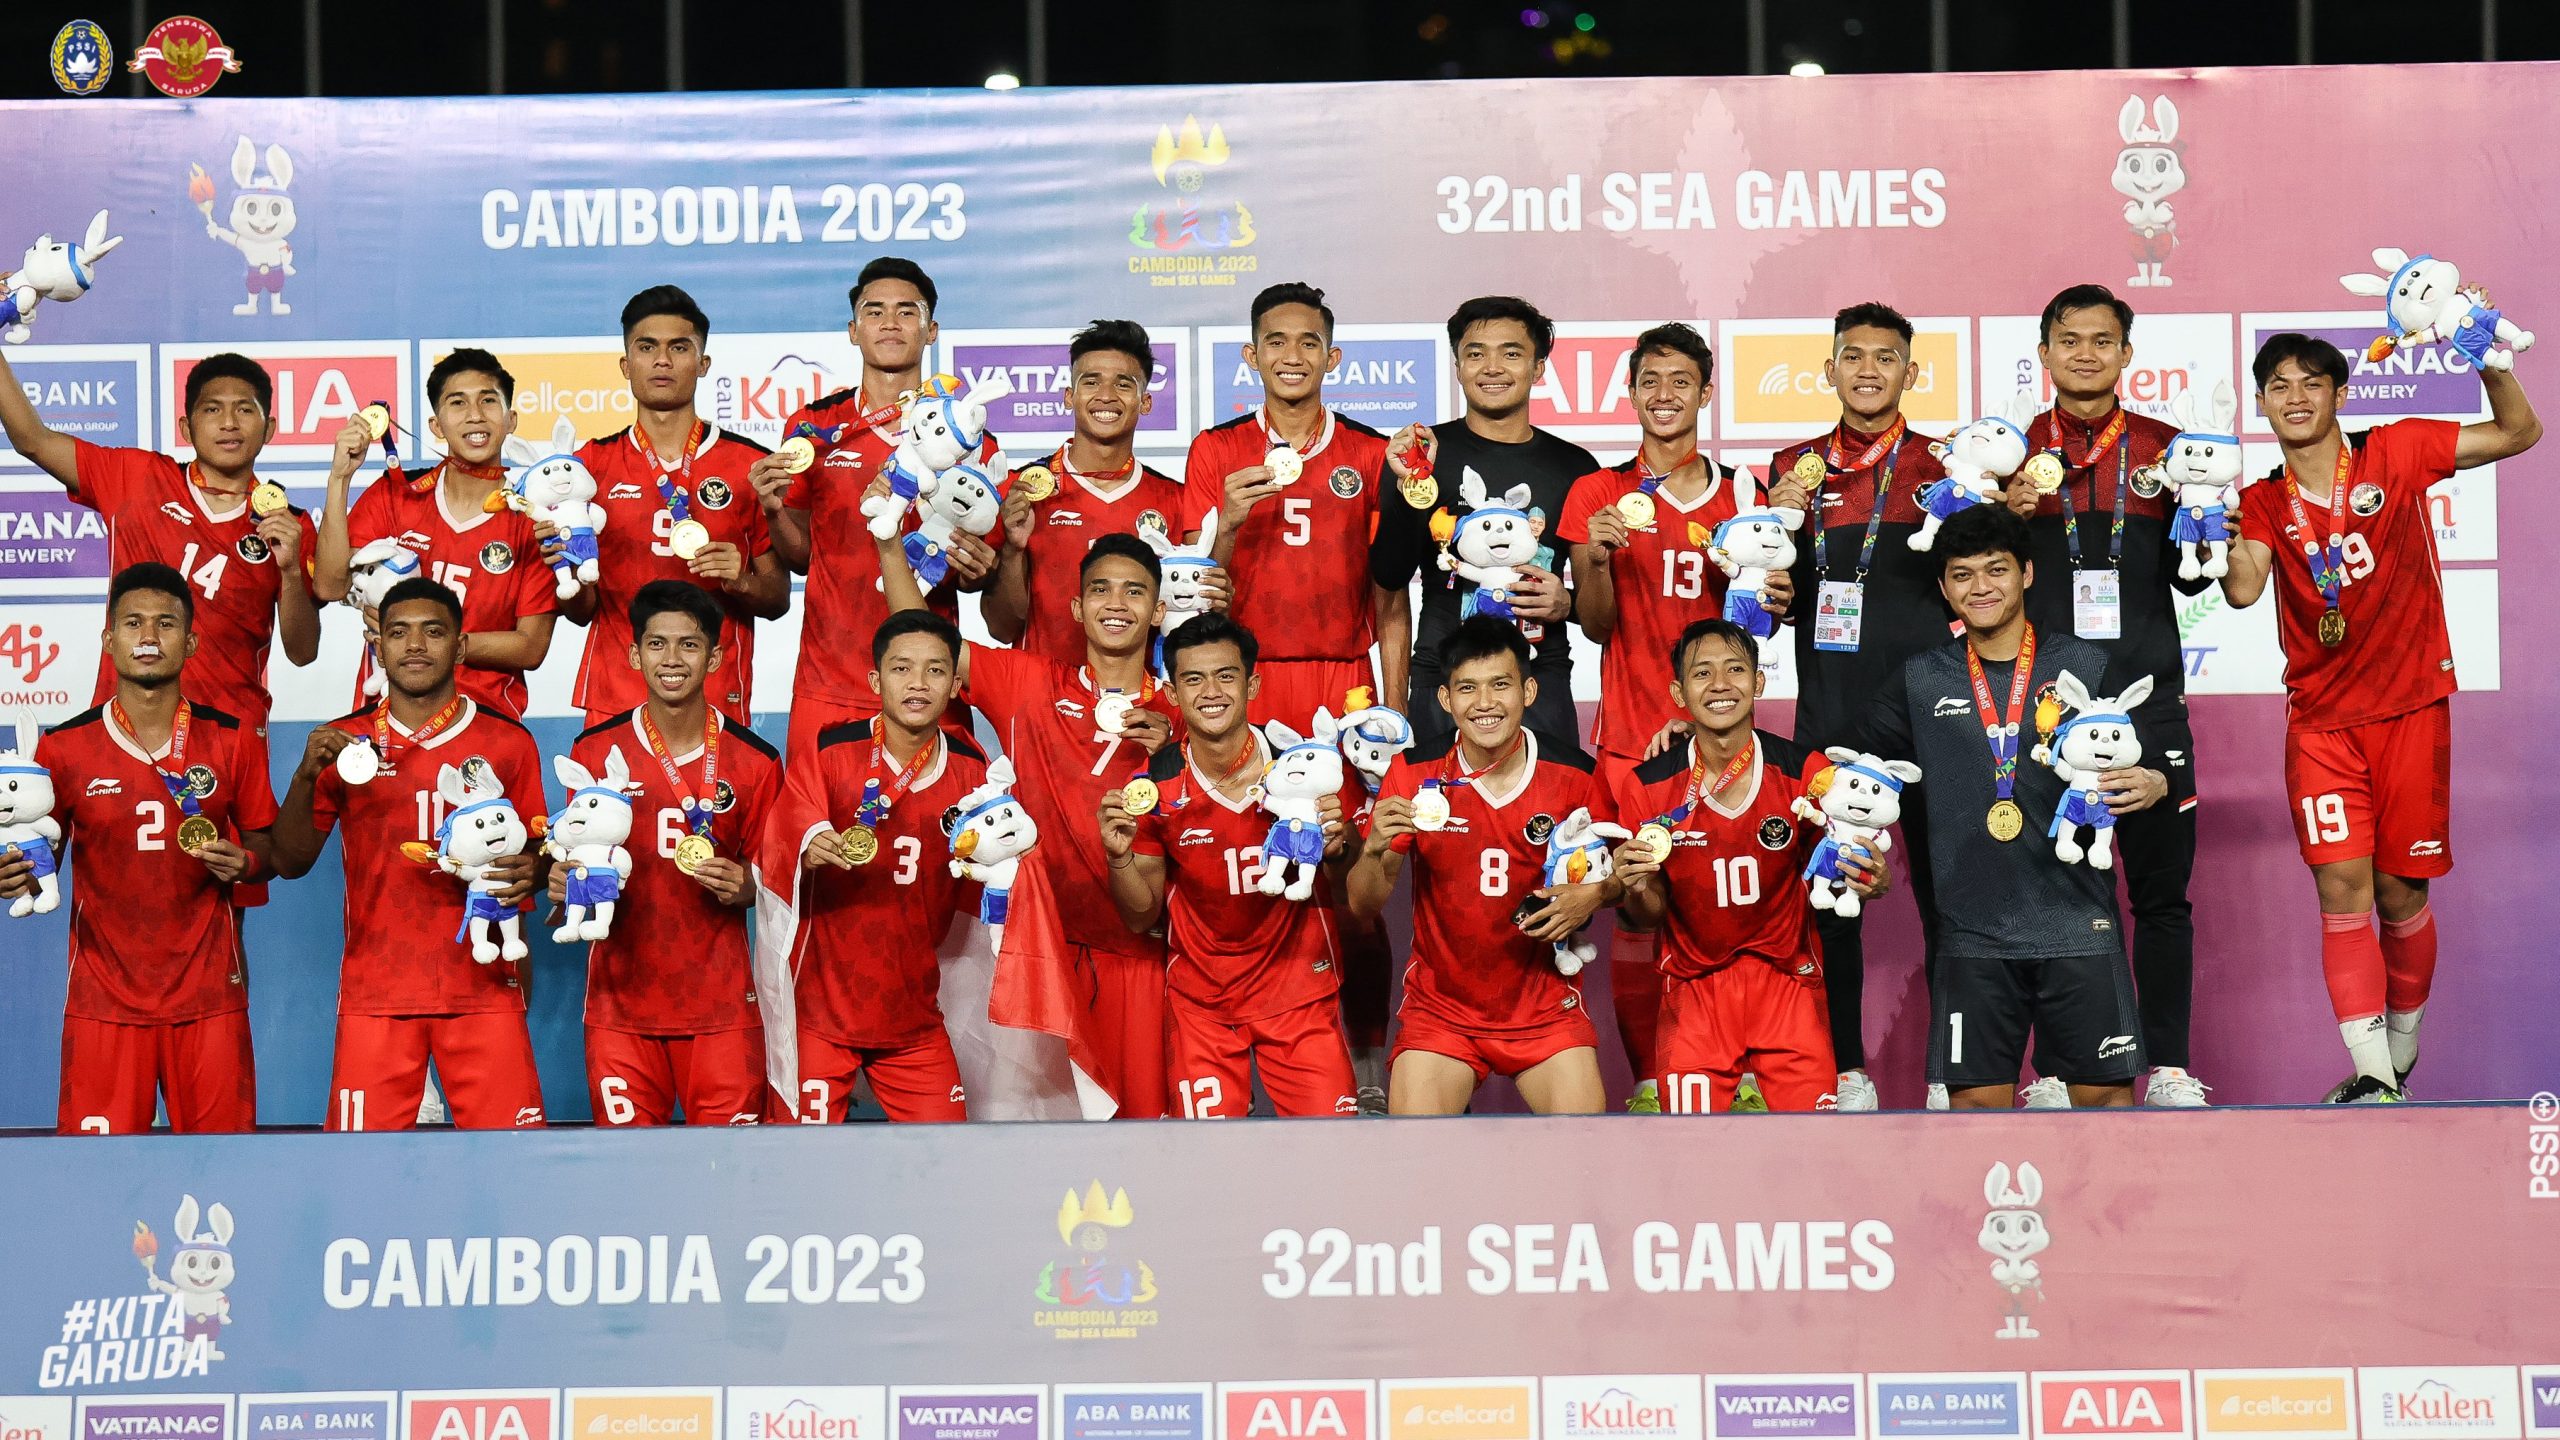 Terharu! Timnas Indonesia Juara SEA Games 2023, Lagu Indonesia Raya Berkumadan di National Olympic Stadium Kamboja